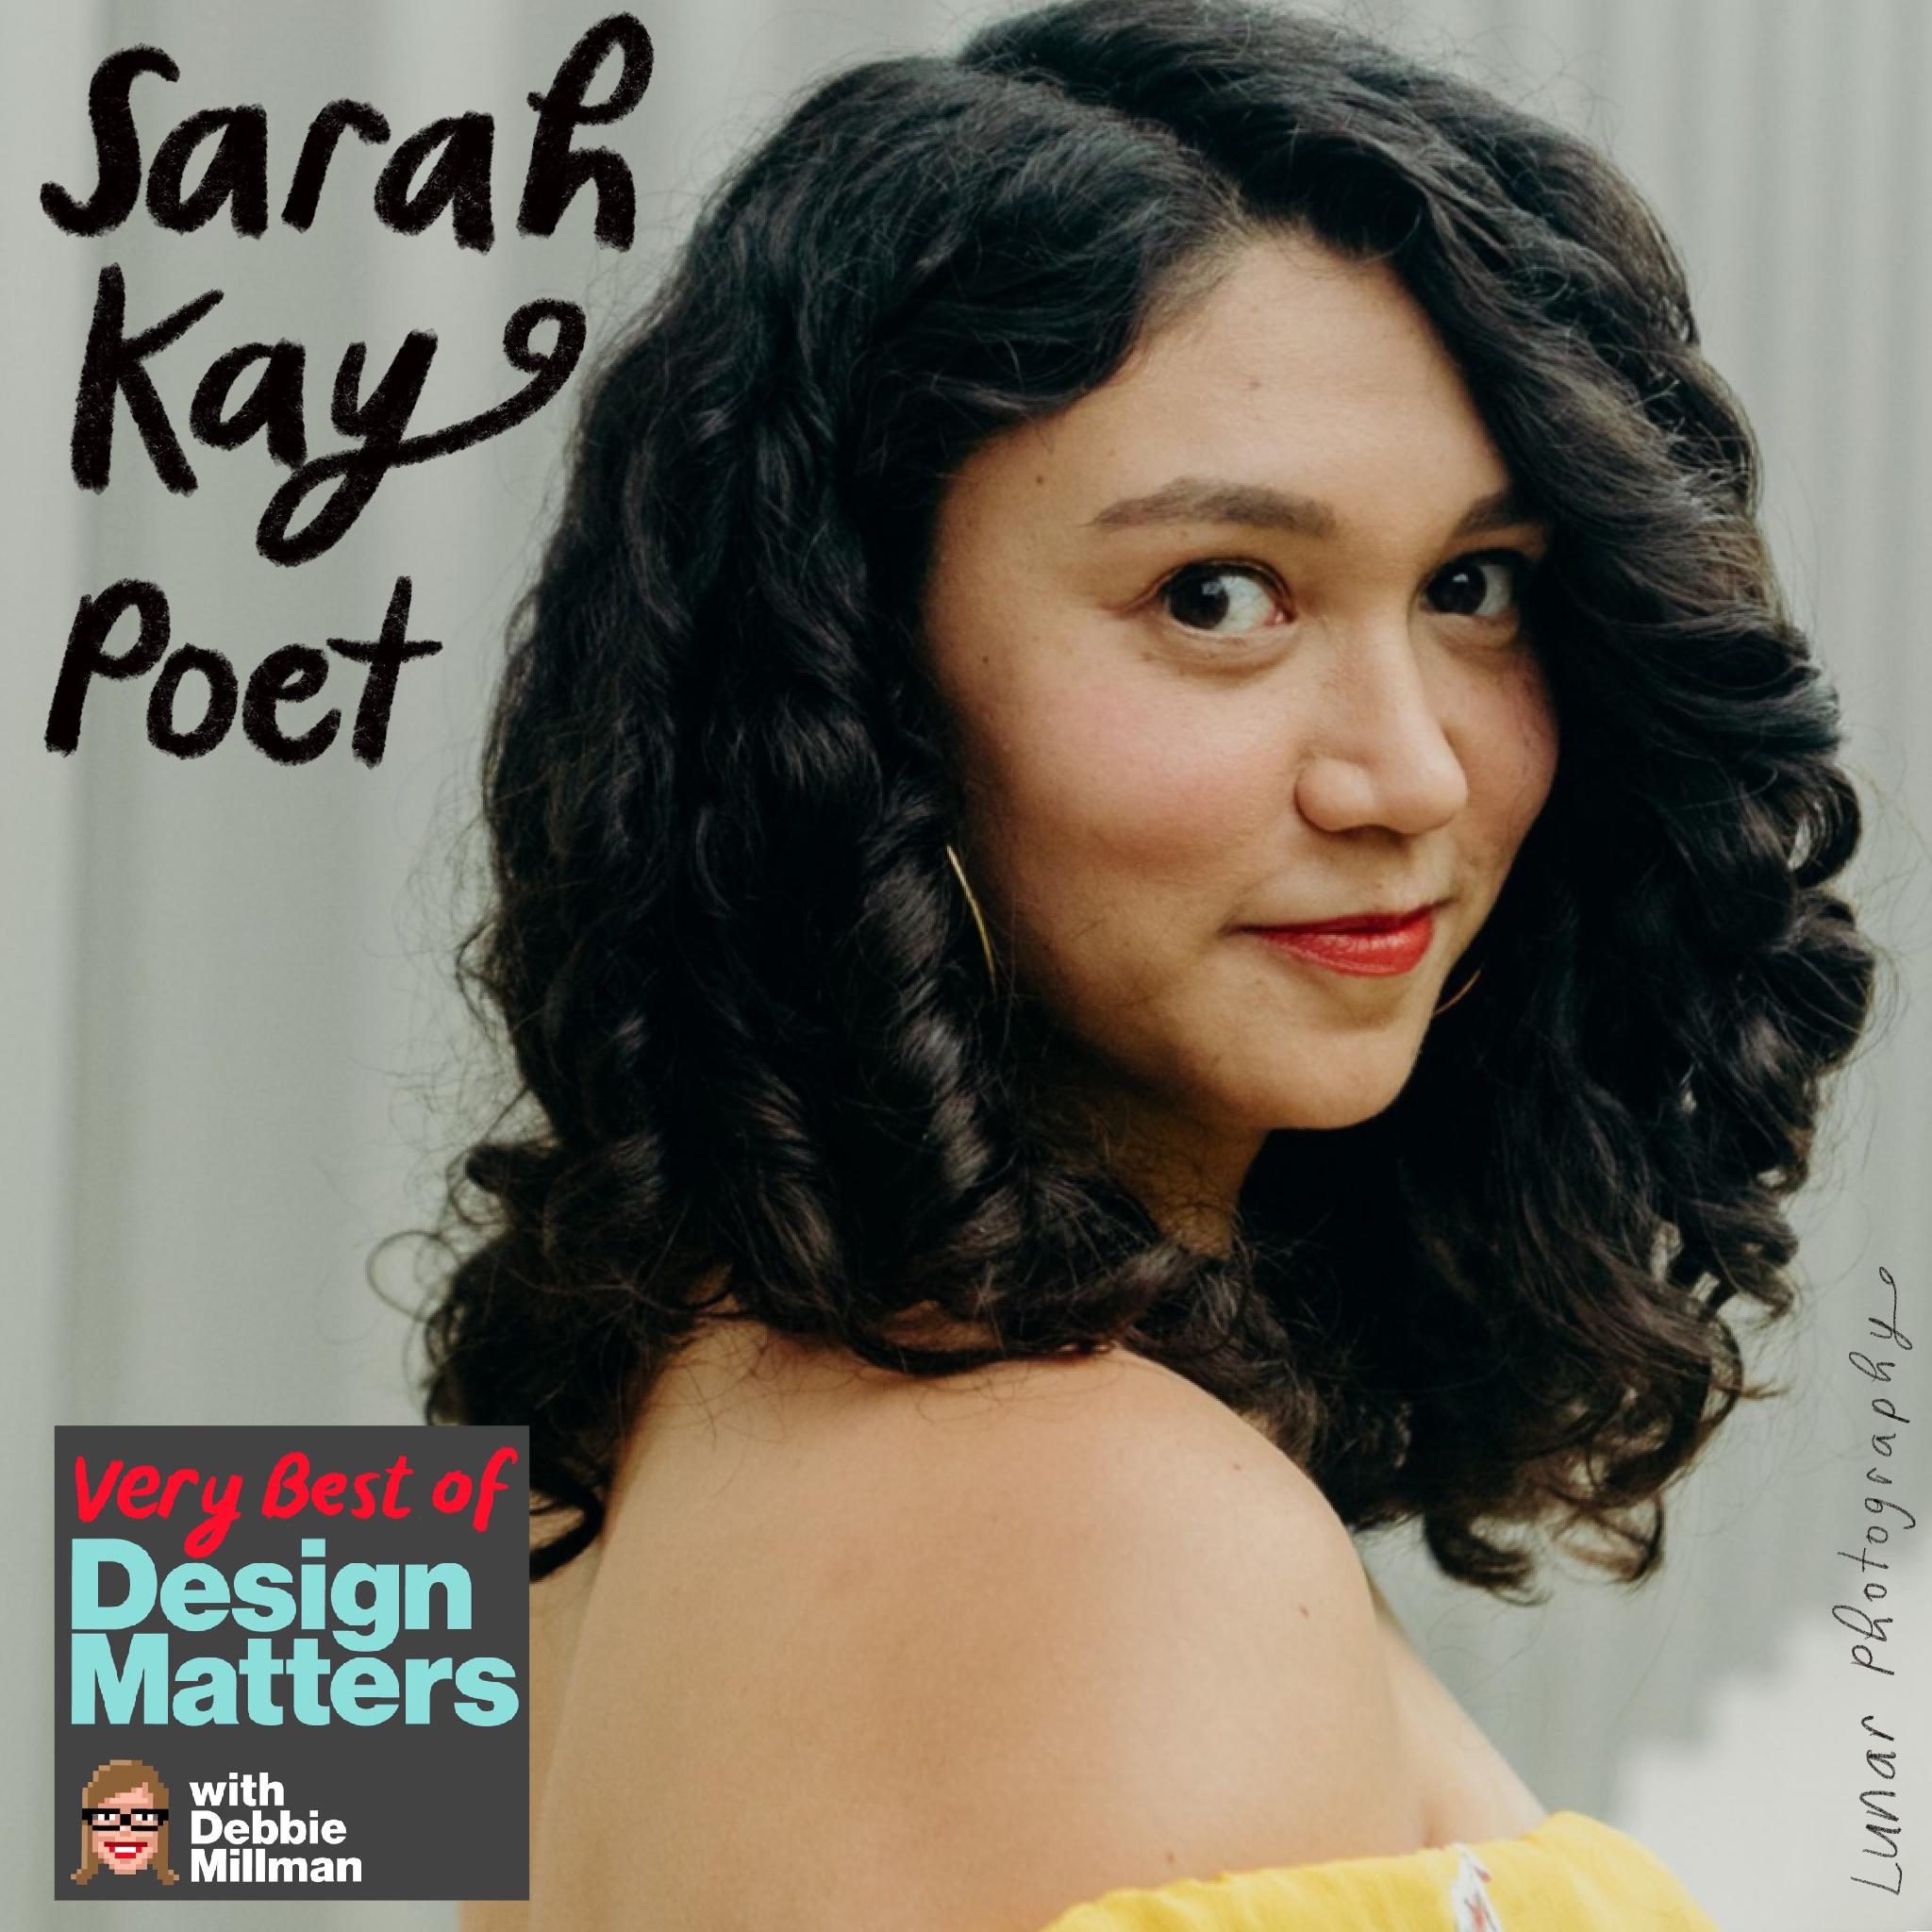 Thumbnail for "Best of Design Matters: Sarah Kay".